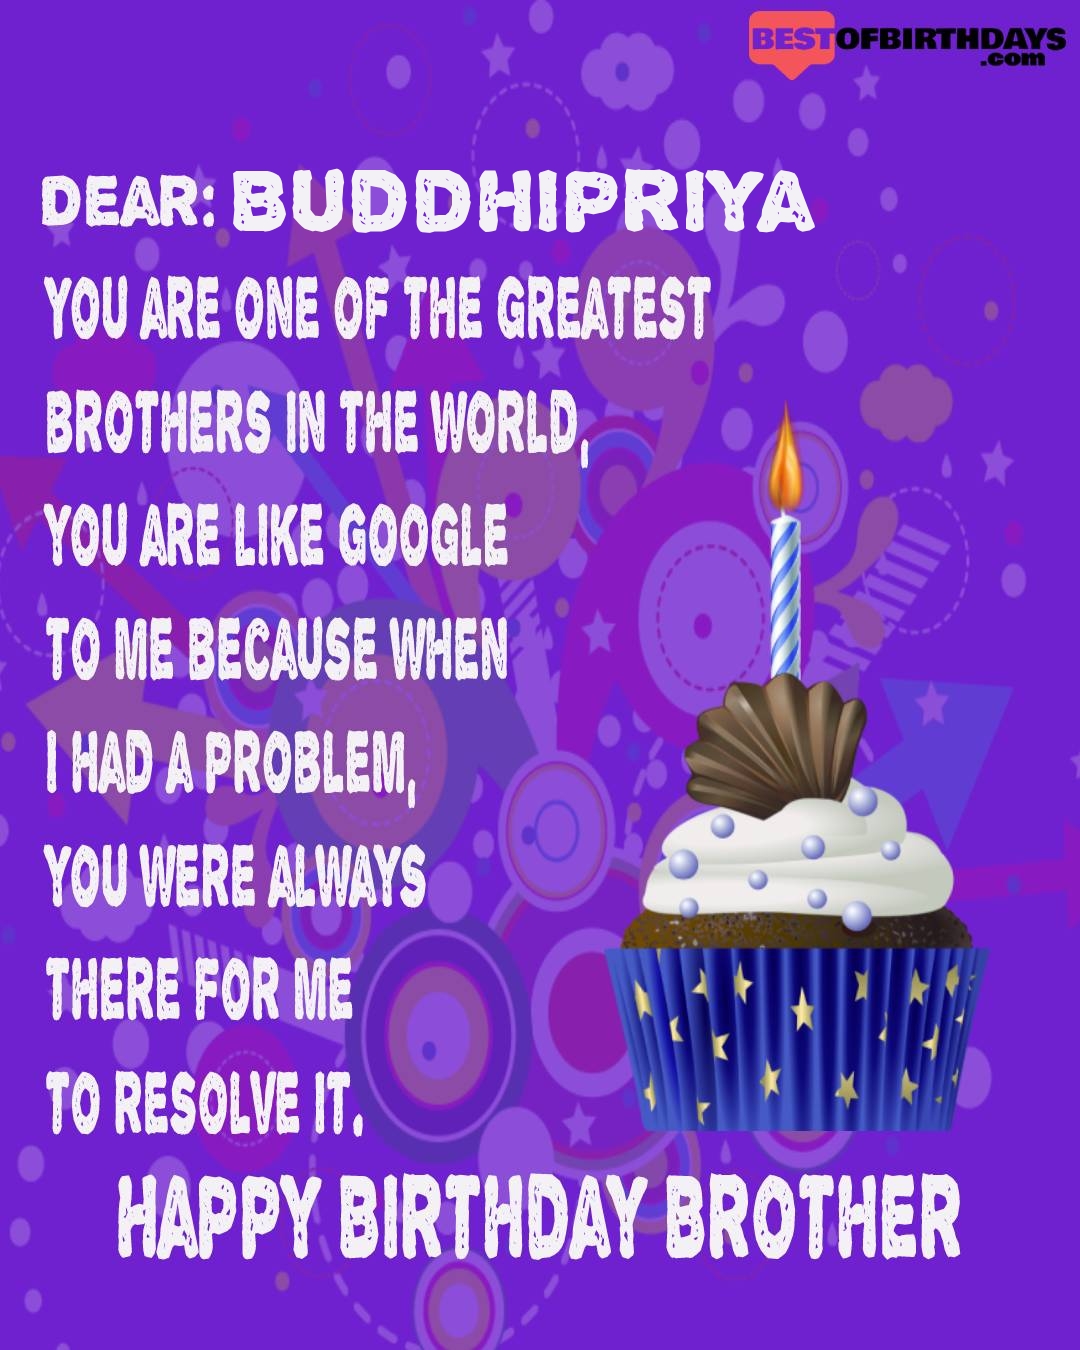 Happy birthday buddhipriya bhai brother bro